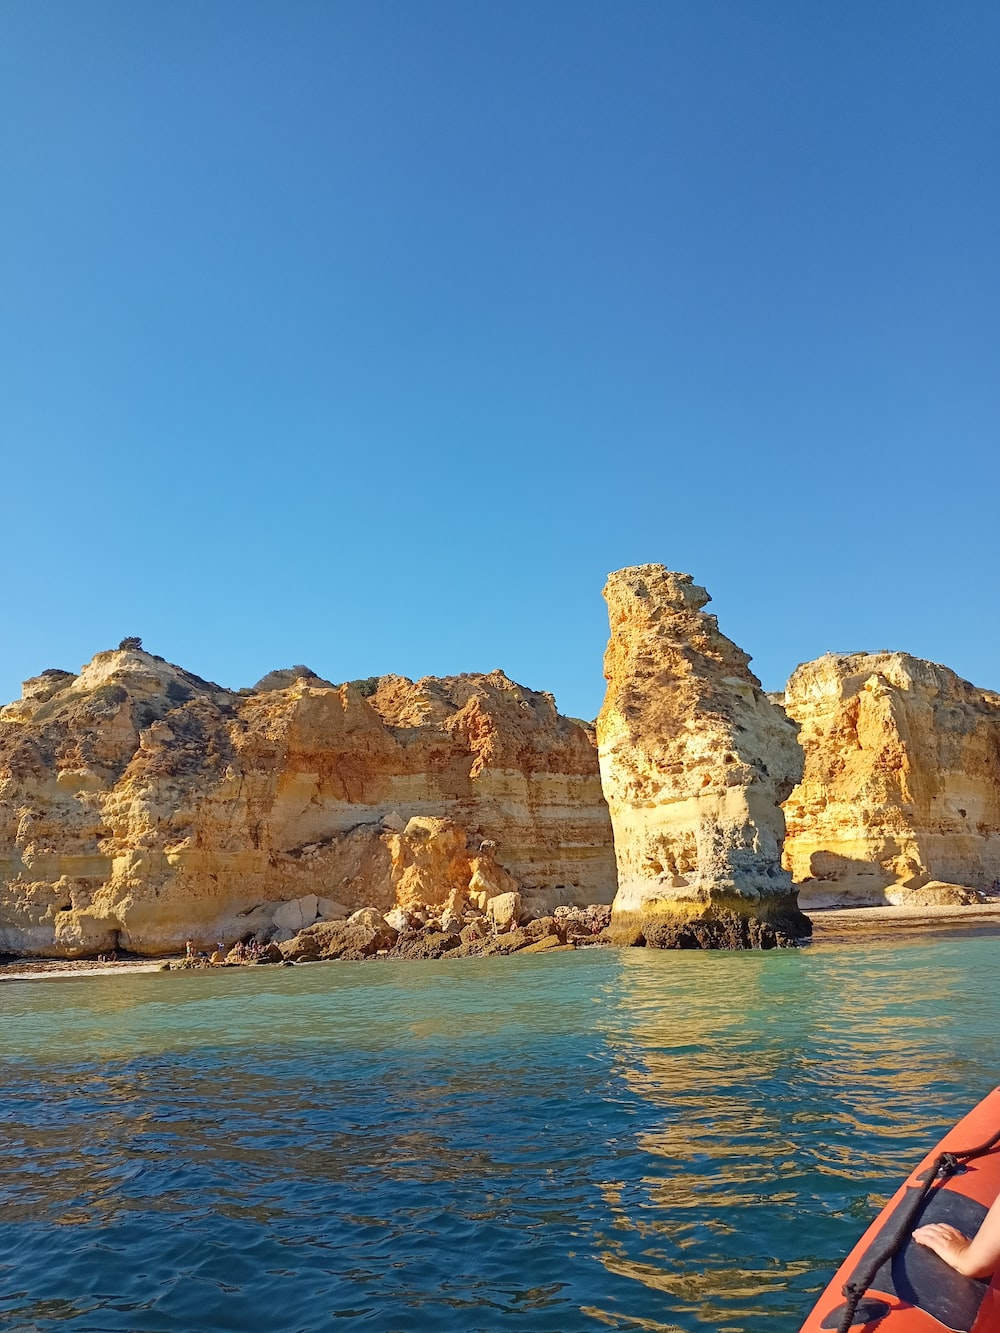  Explore the Algarve Region with Algarve Go - Your Travel Guide!